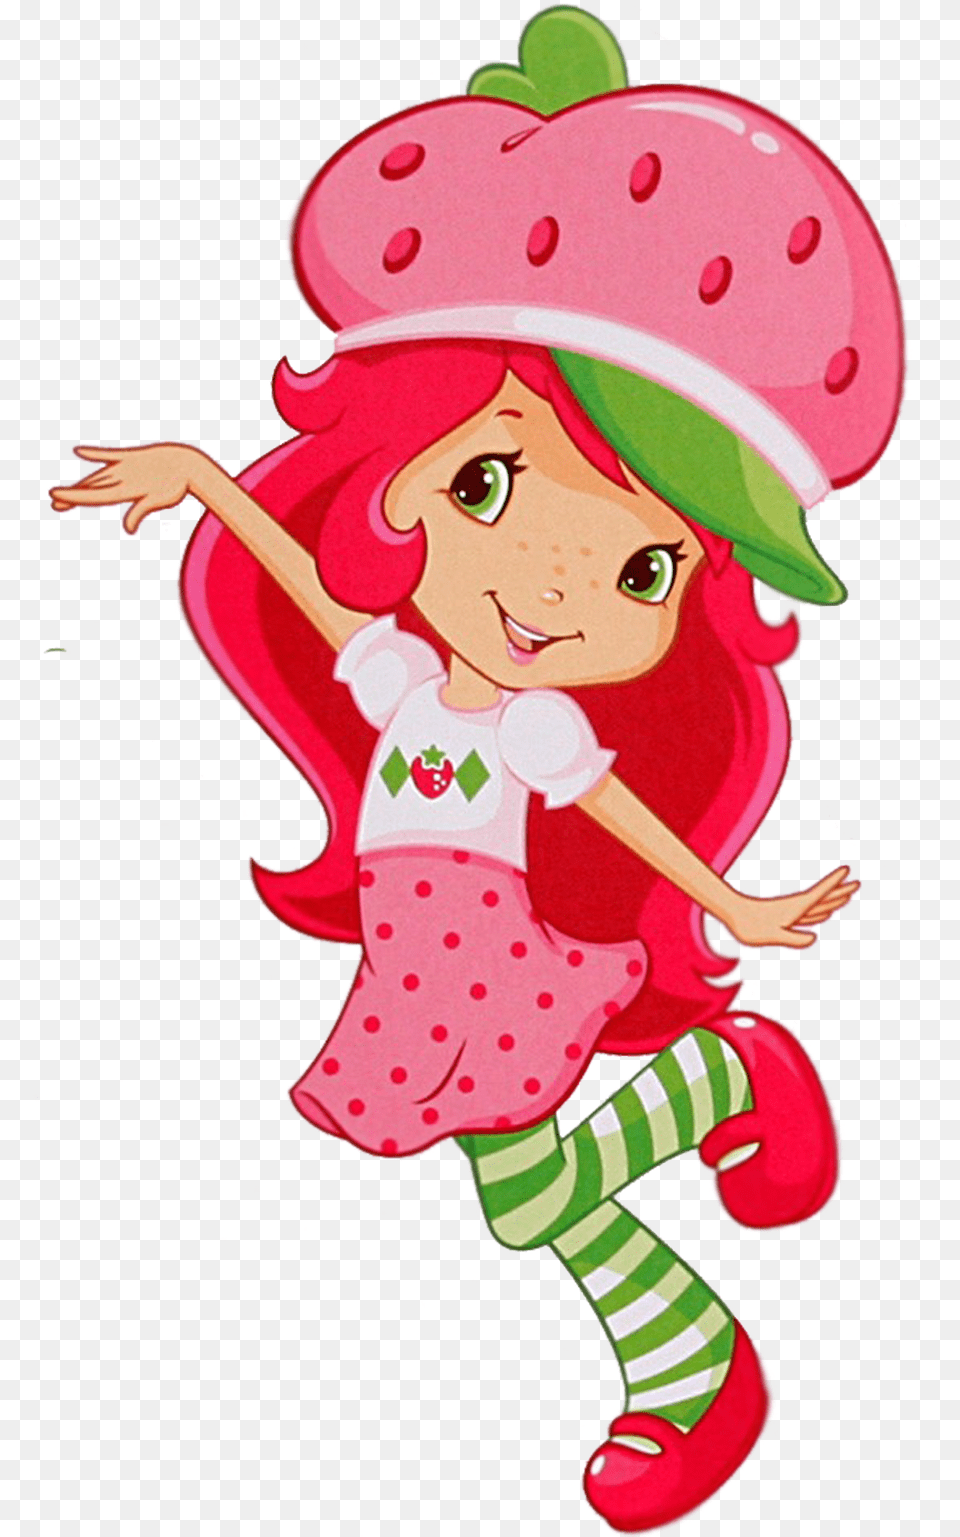 Hat Clipart Strawberry Shortcake Cartoon Strawberry Shortcake Birthday, Elf, Baby, Person, Face Png